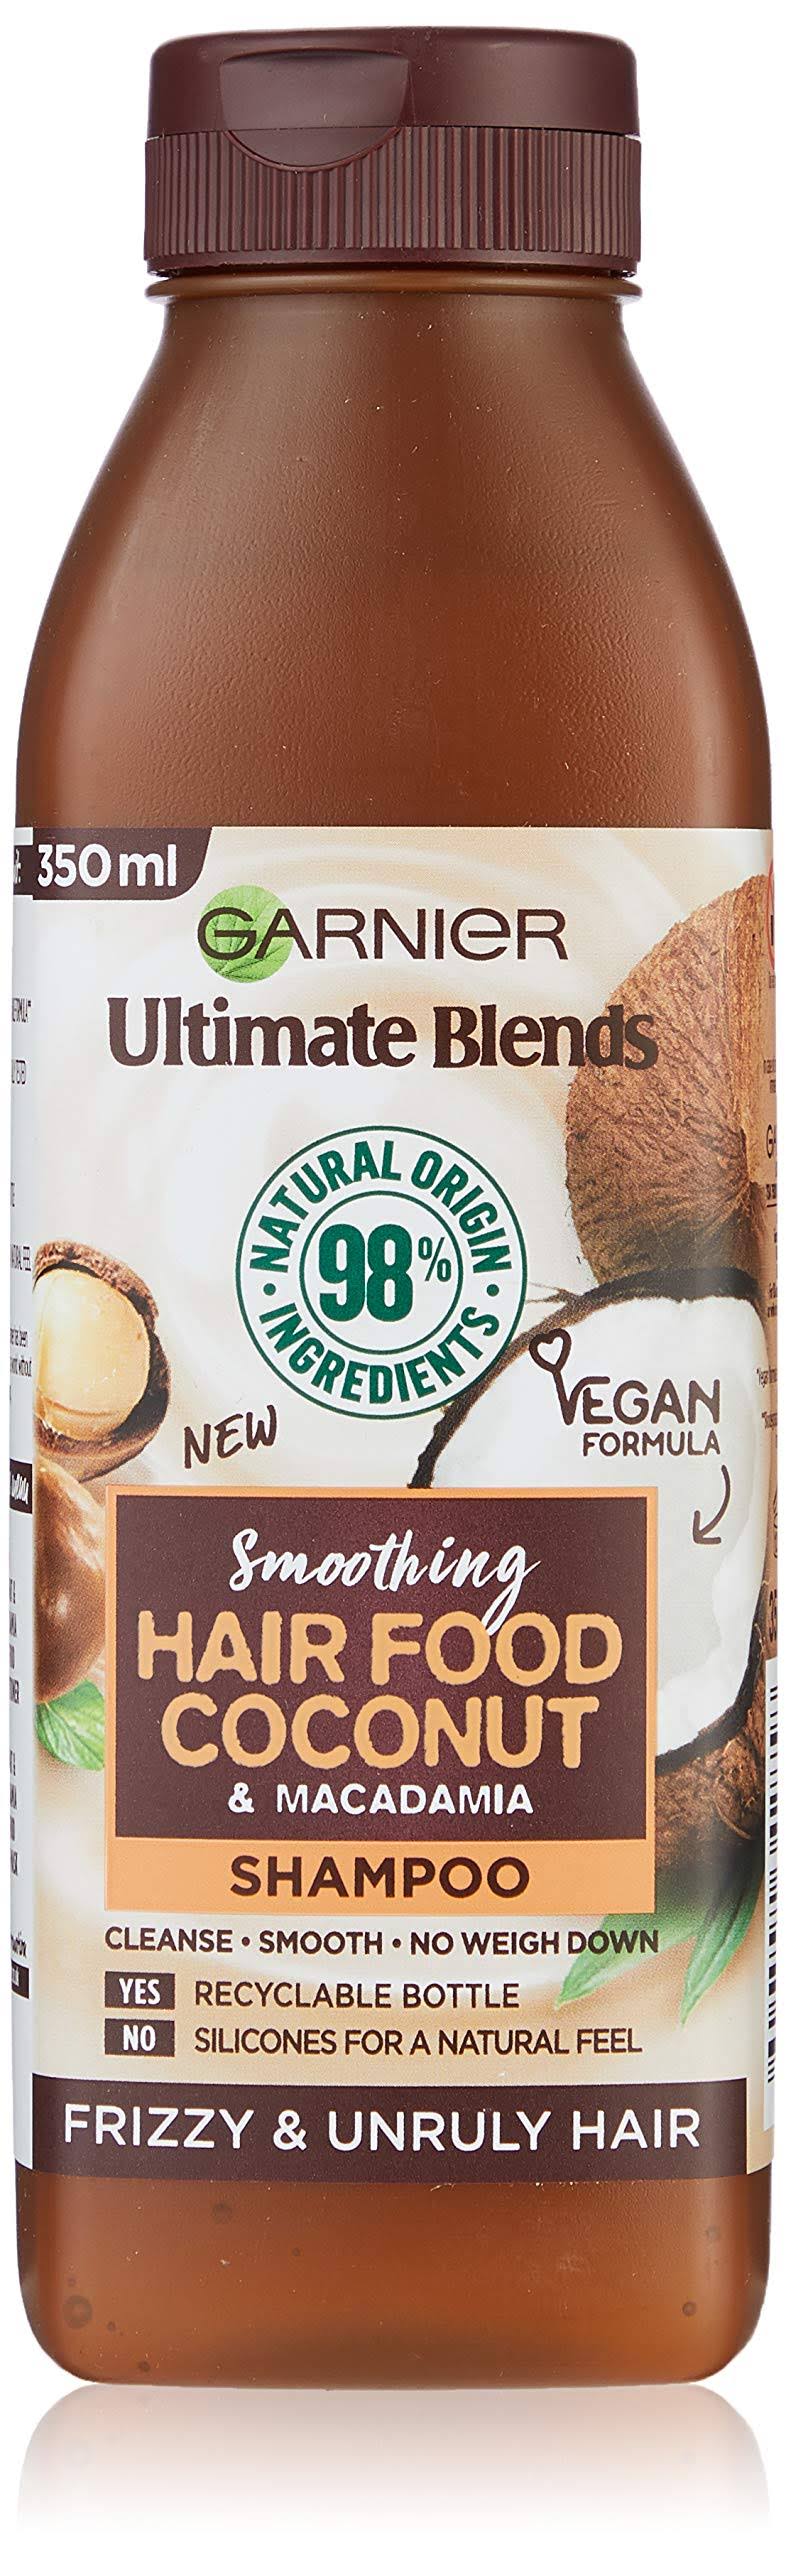 Garnier Ultimate Blends Smoothing Hair Food Coconut Shampoo (350 ml)